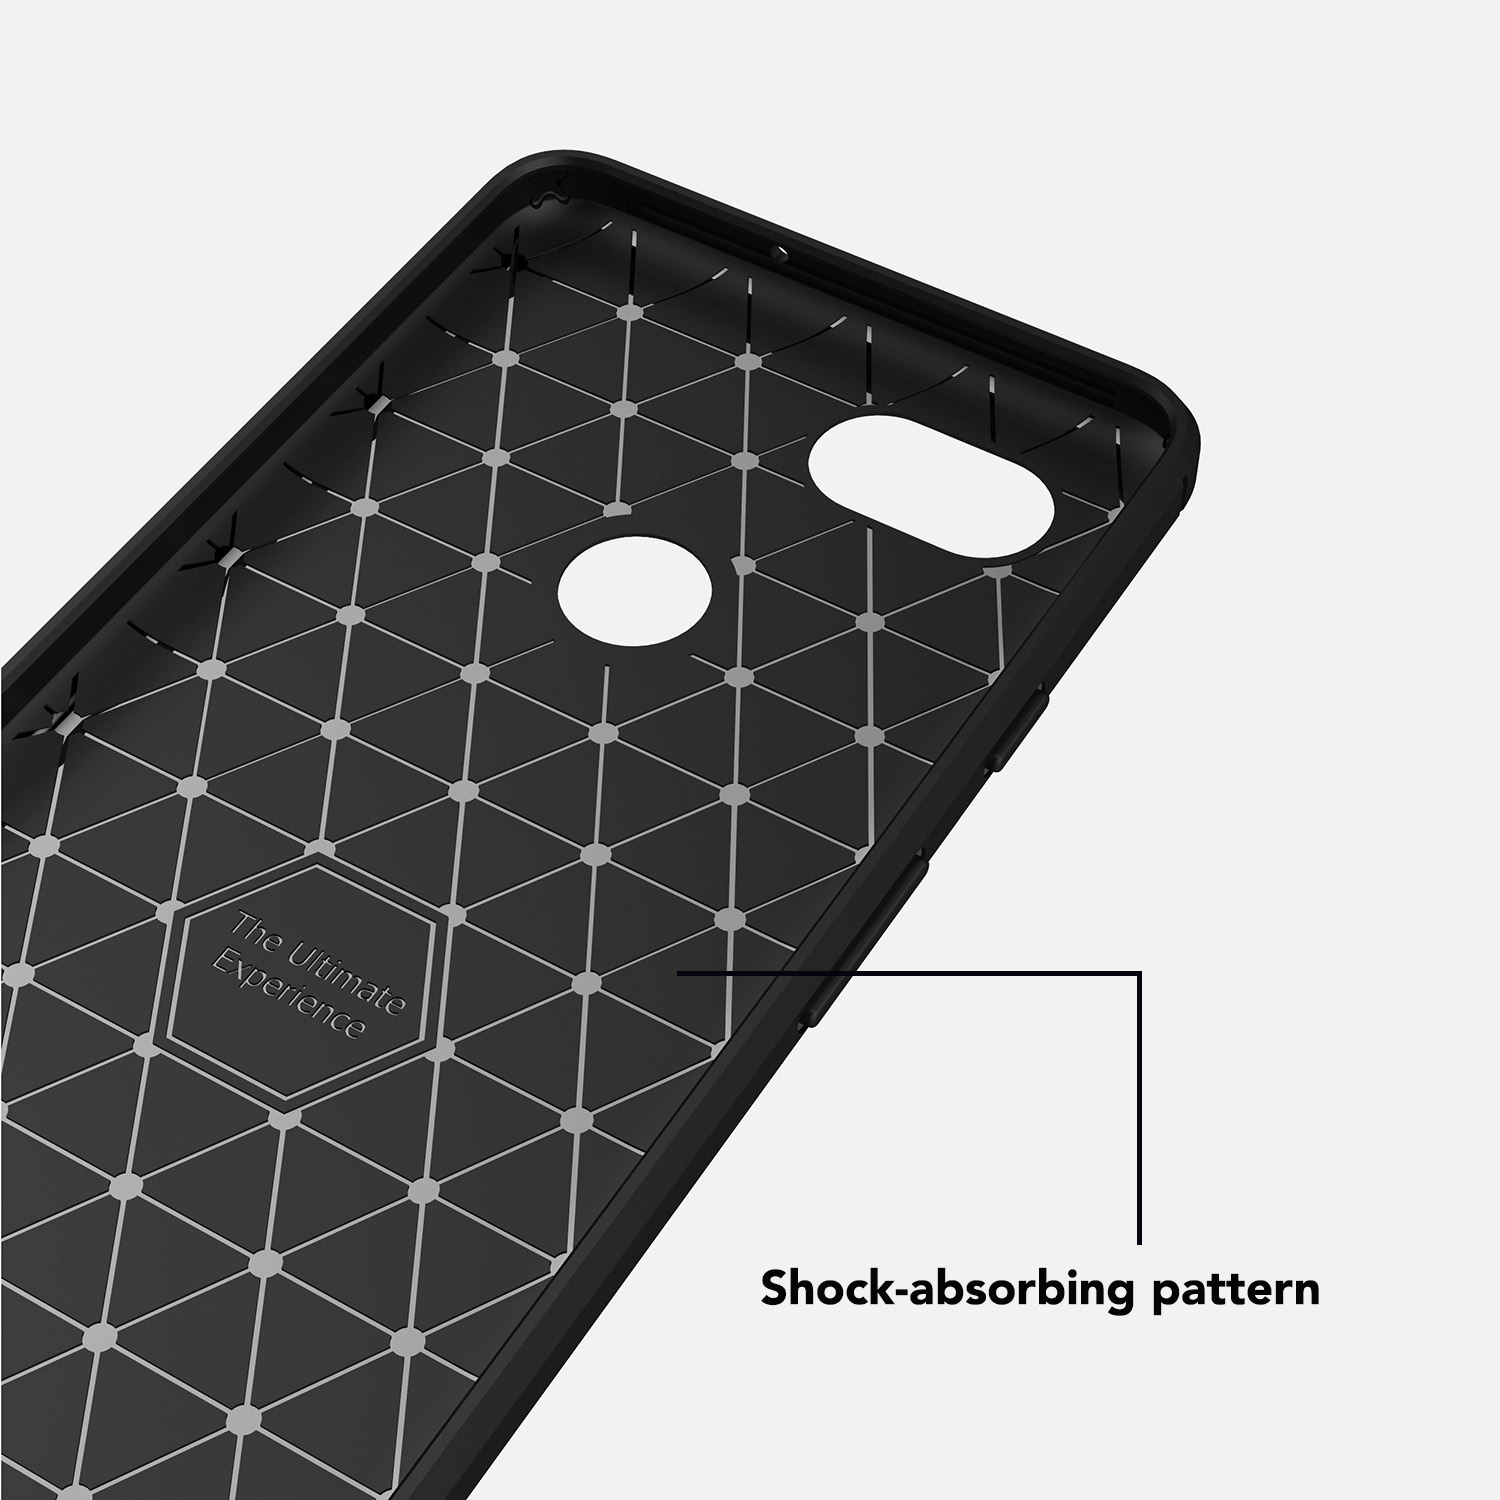 NALIA Carbon-Look Silikon Backcover, Pixel XL, Google, Schwarz 2 Hülle